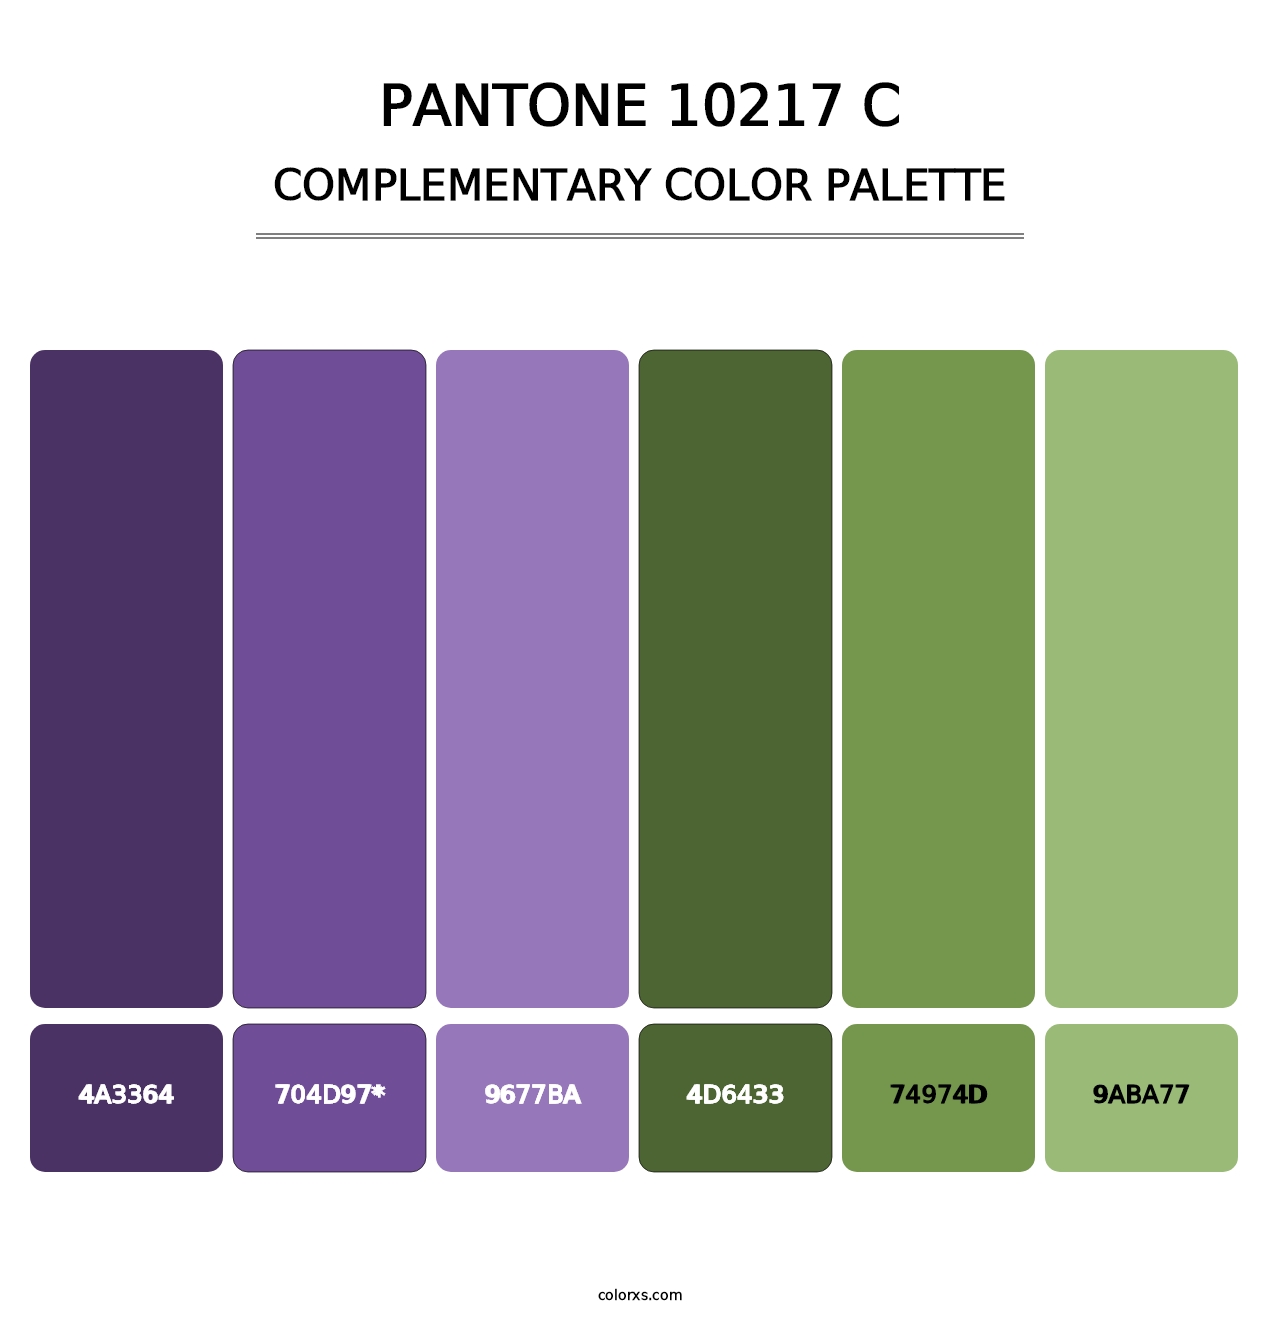 PANTONE 10217 C - Complementary Color Palette